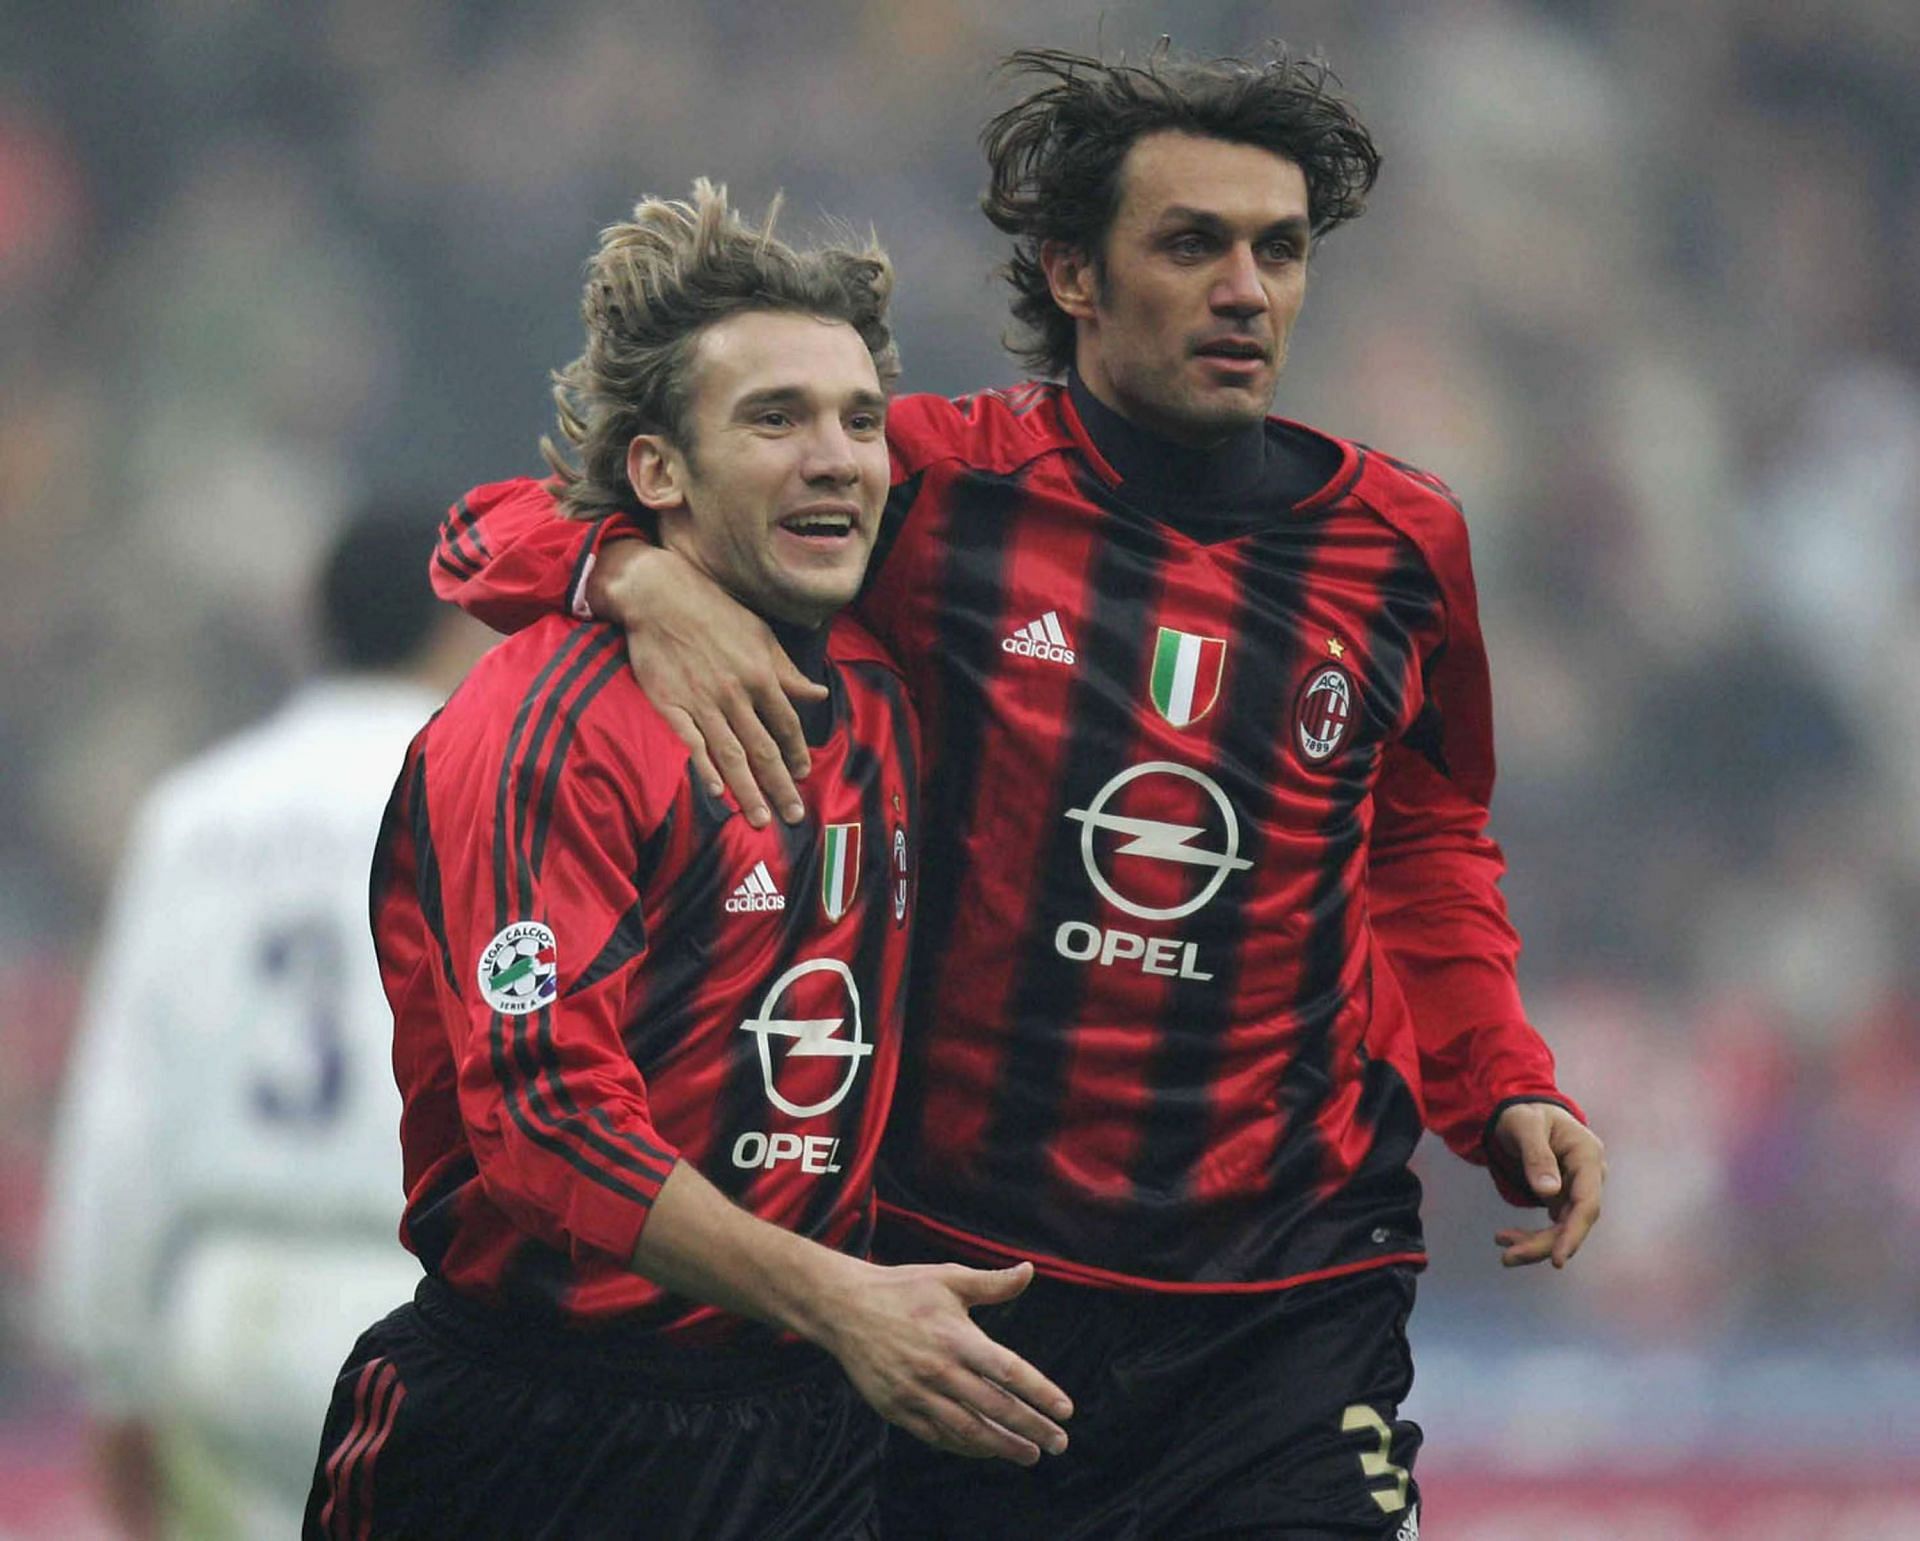 Andriy Shevchenko (left) celebrating with Maldini (right) in a Serie A match (2004)